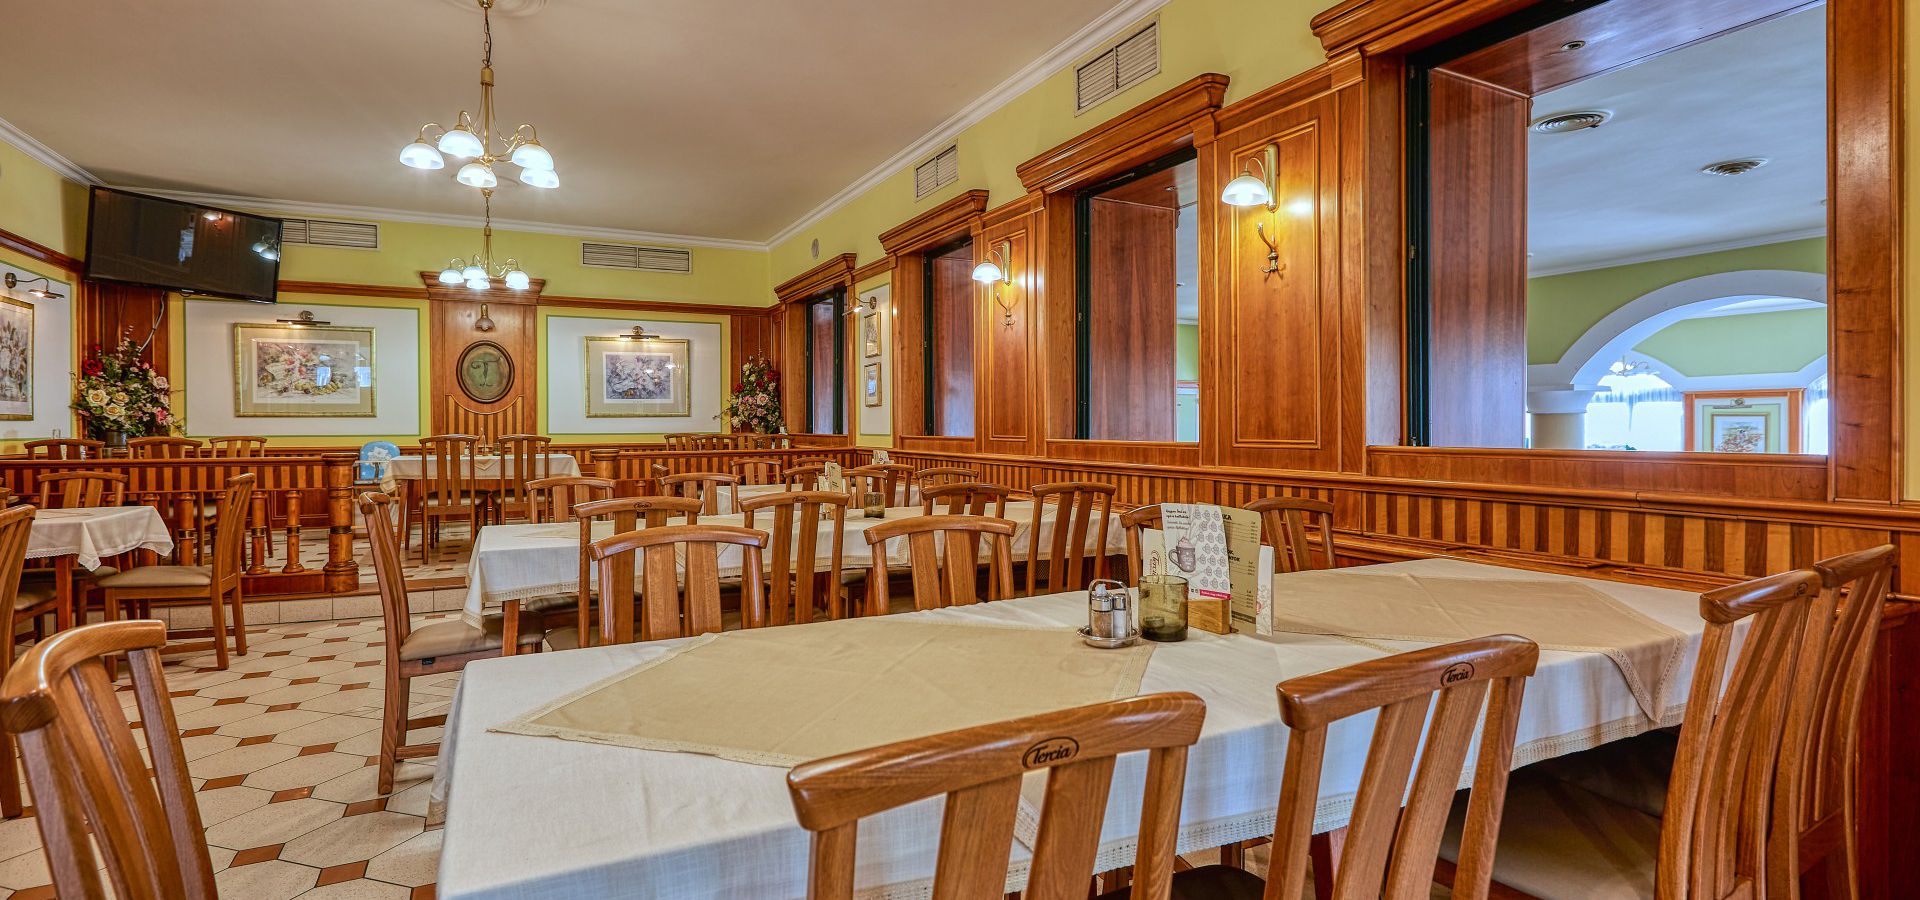 Reserve a table at the Tercia Kópháza Restaurant!